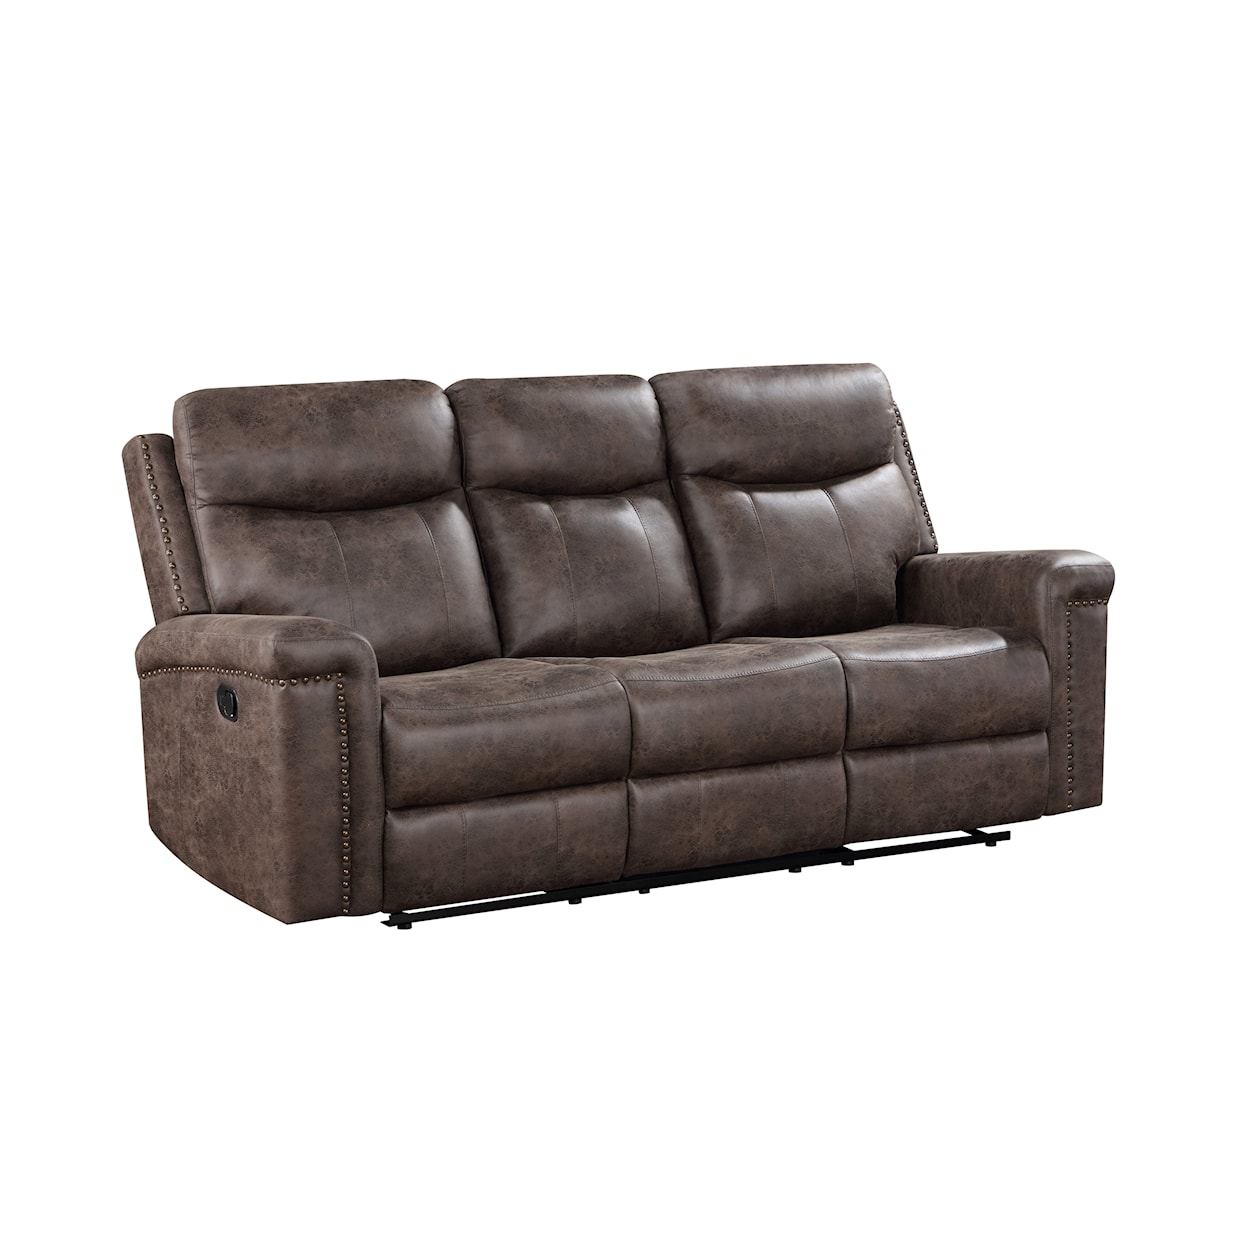 New Classic Furniture Quade Sofa